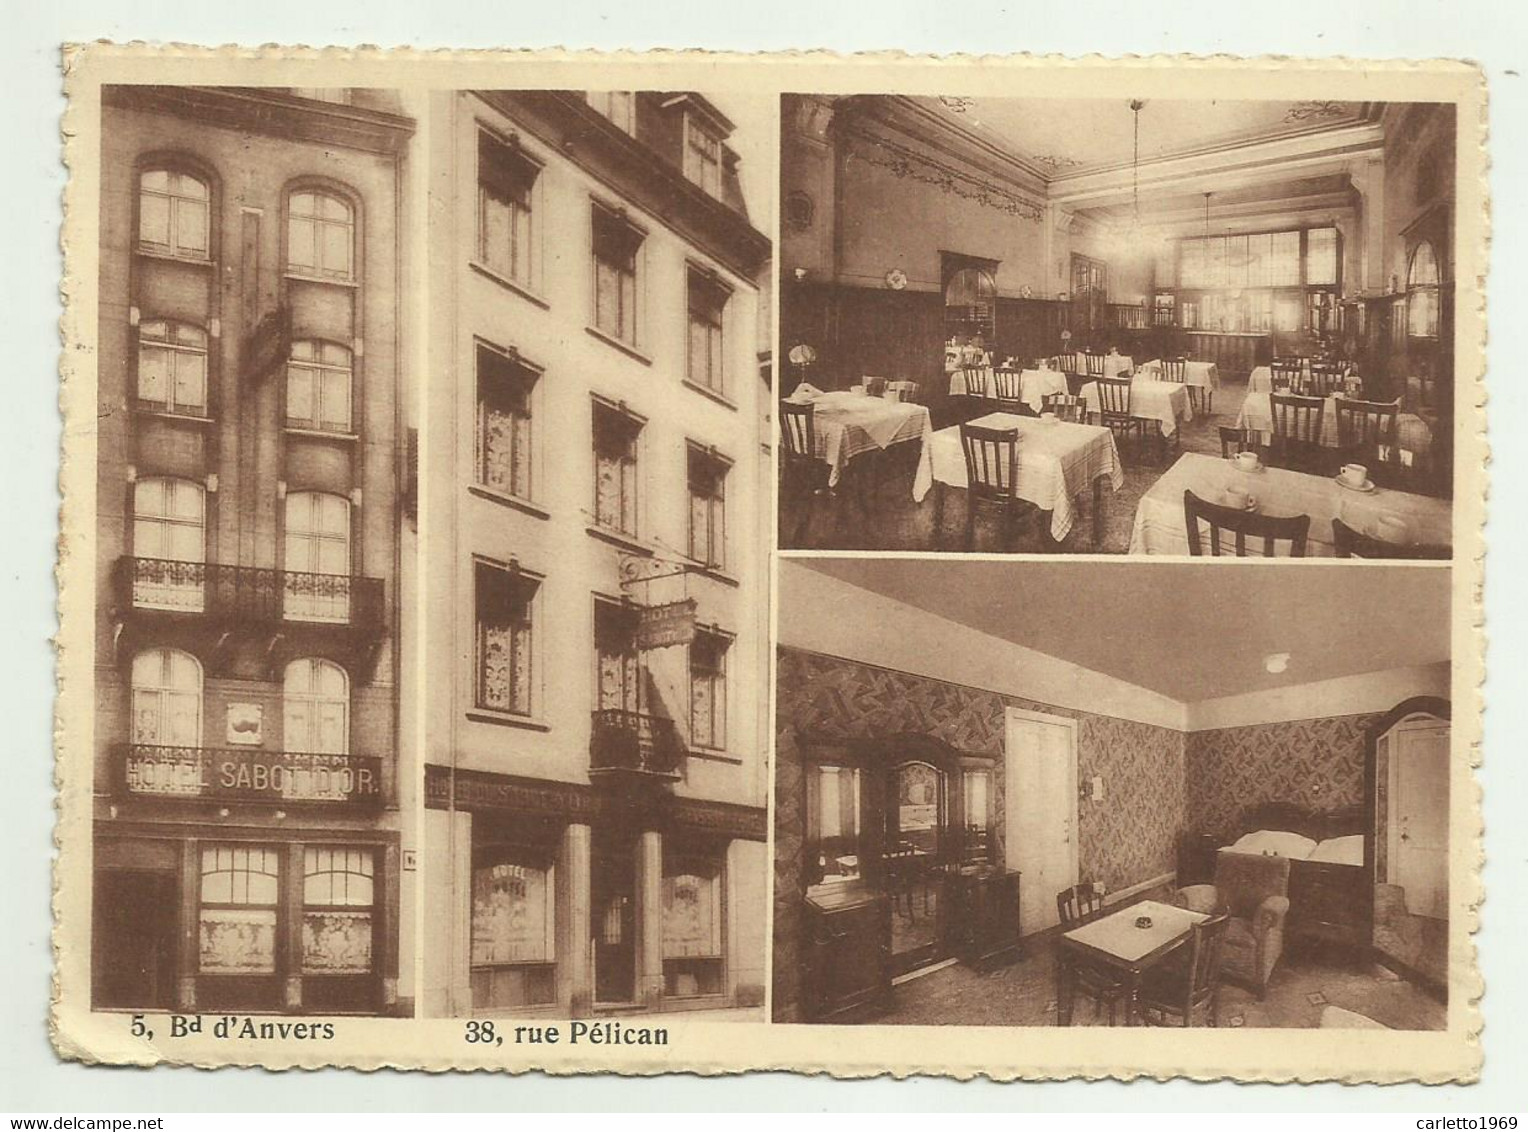 BRUXELLES NORD - HOTEL DU SABOT D'OR  - VIAGGIATA  FG - Cafés, Hôtels, Restaurants